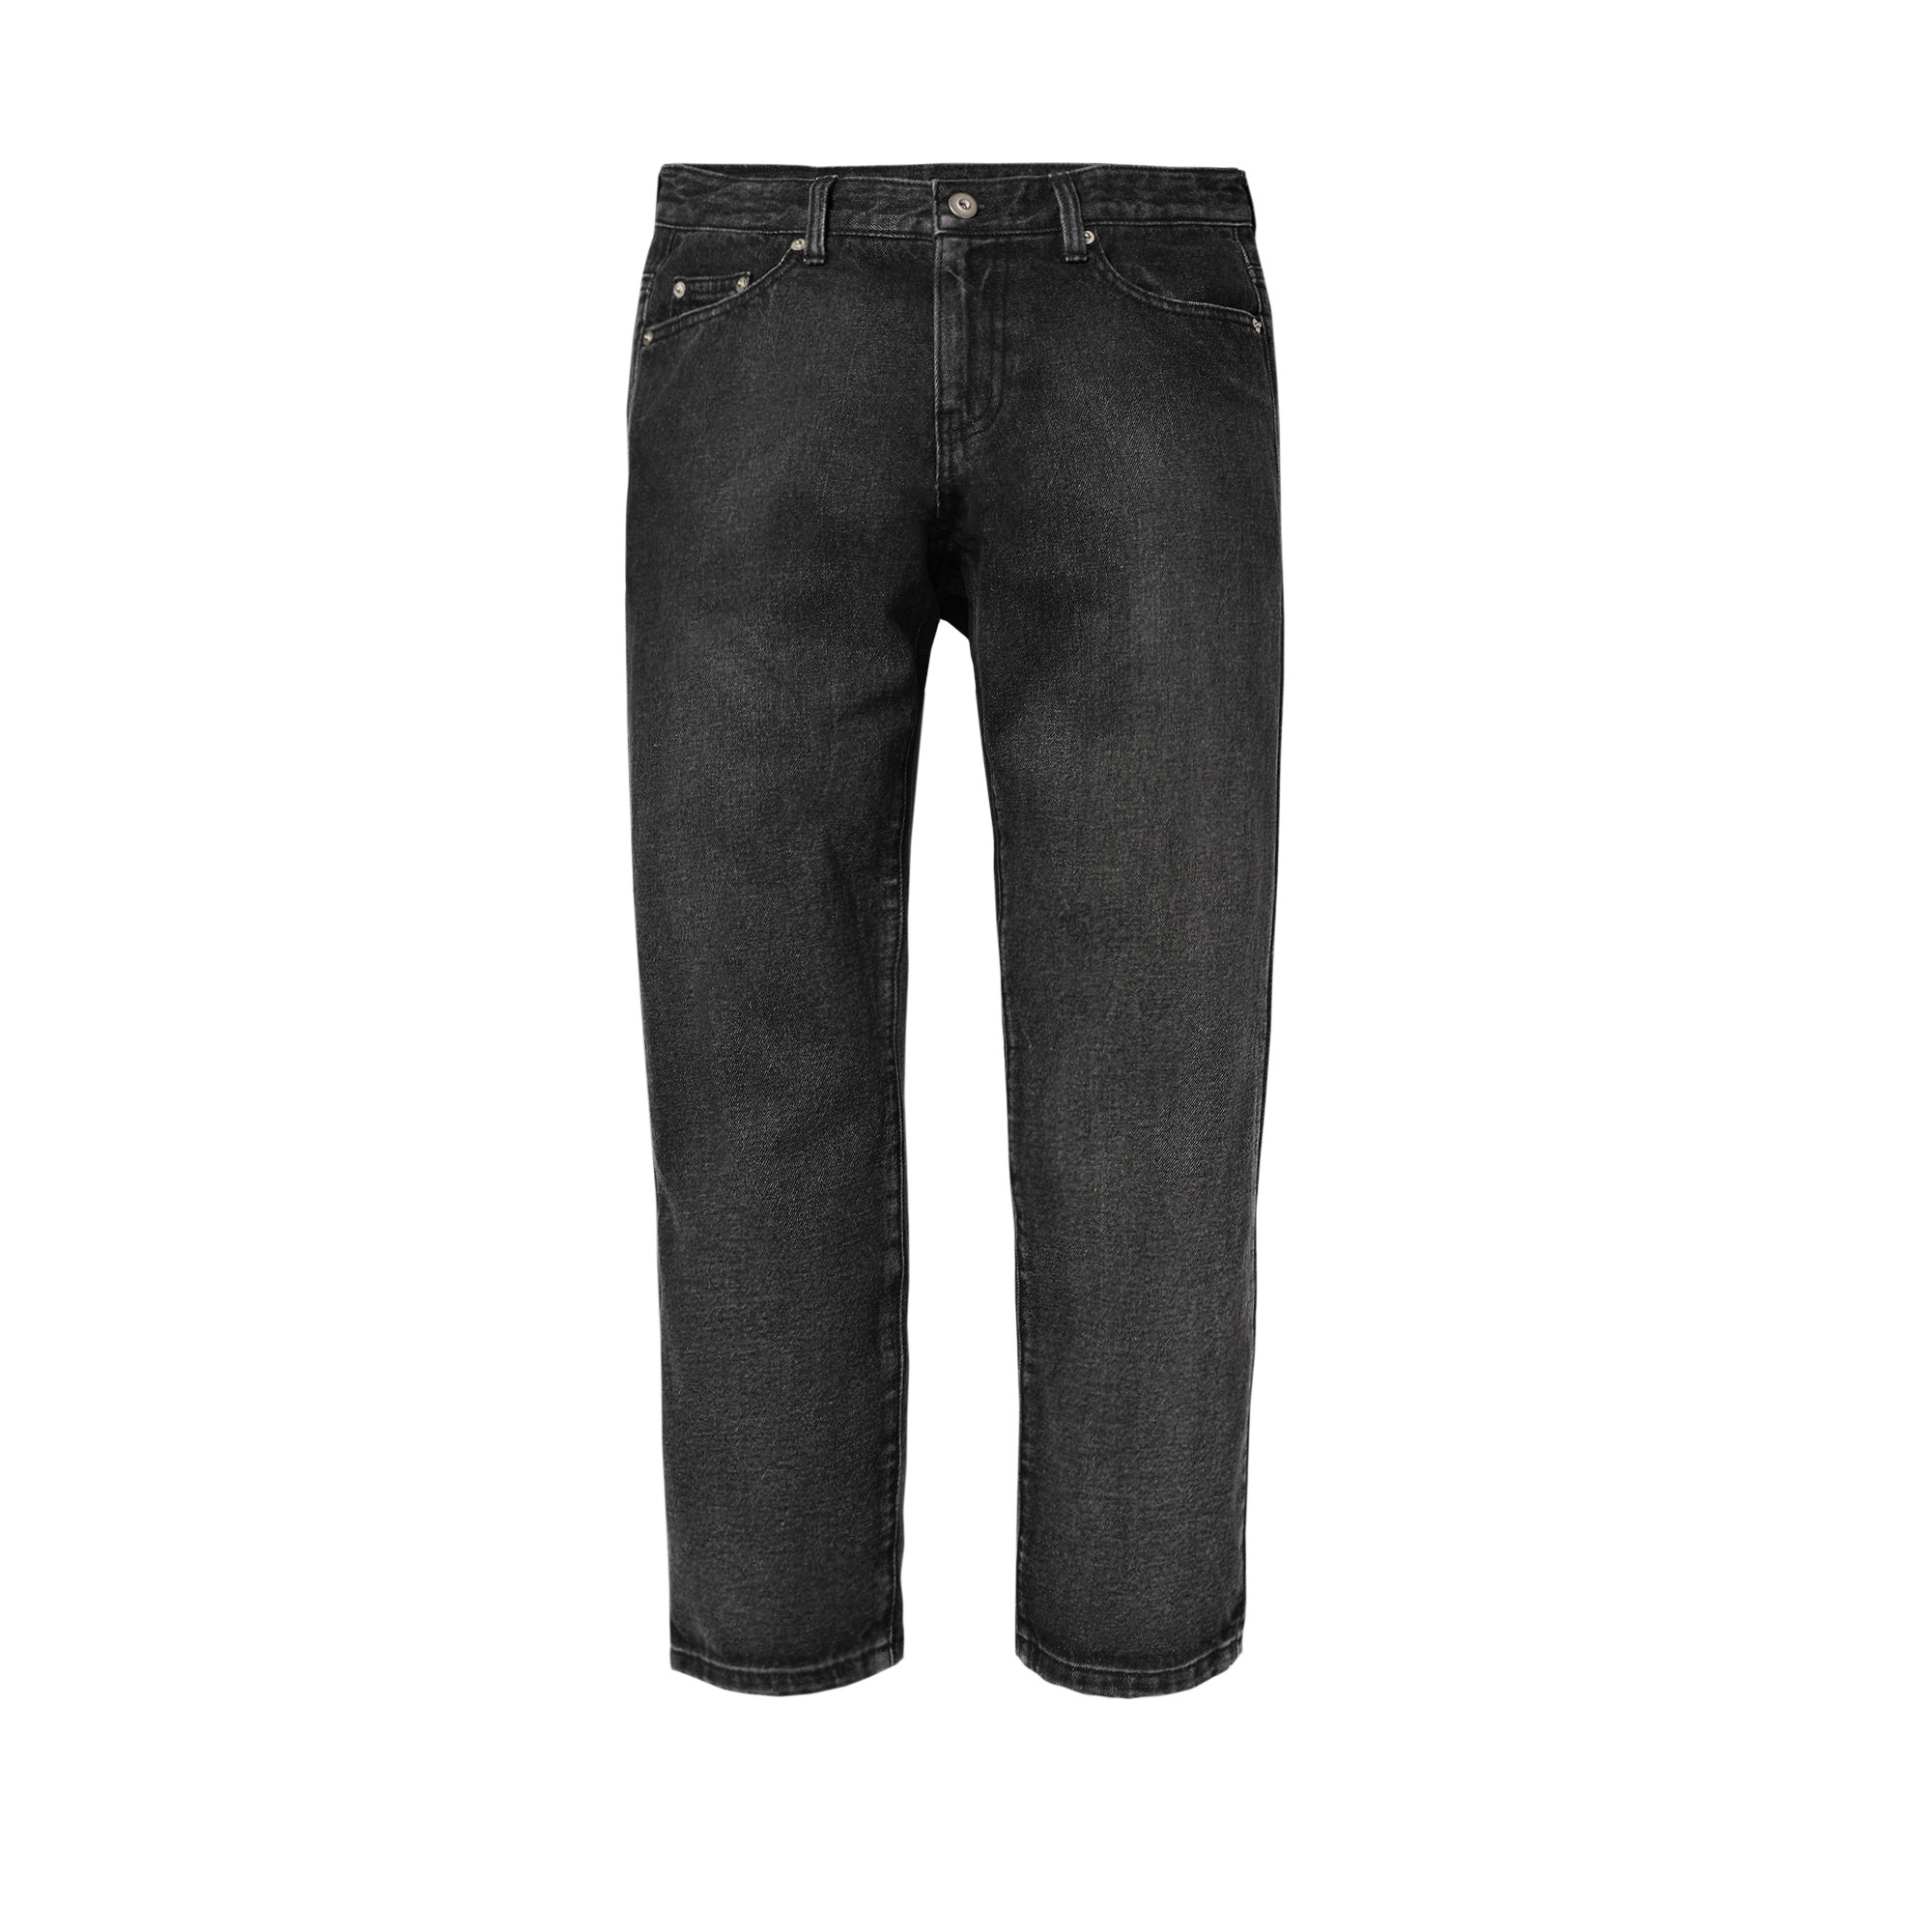 tapered crop jeans / black